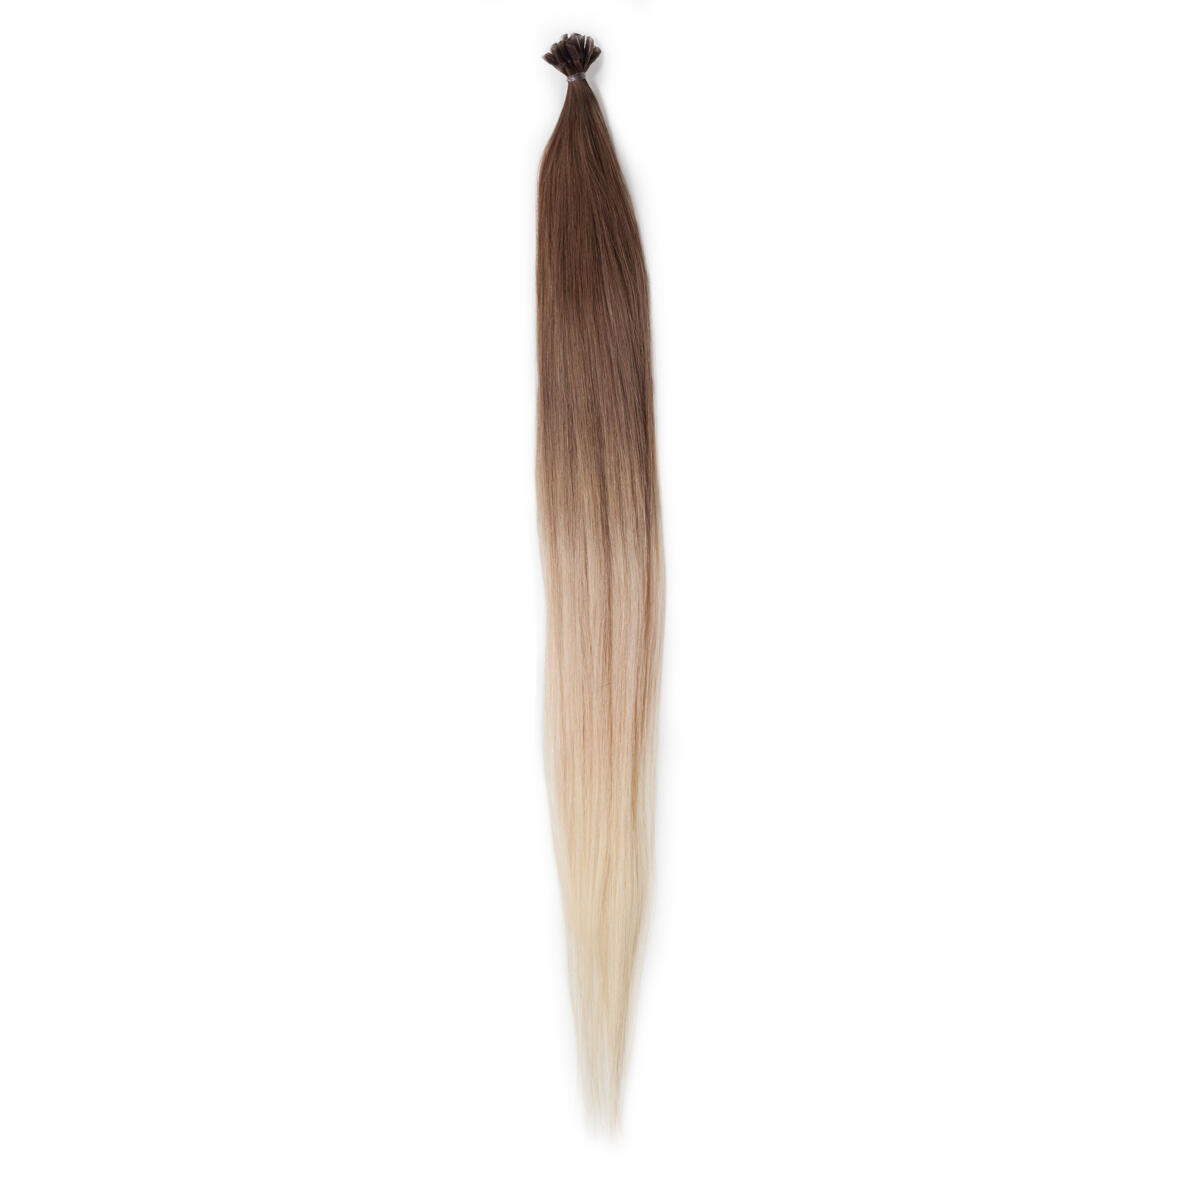 Nail Hair Original O5.1/10.8 Medium Ash Blond Ombre 40 cm